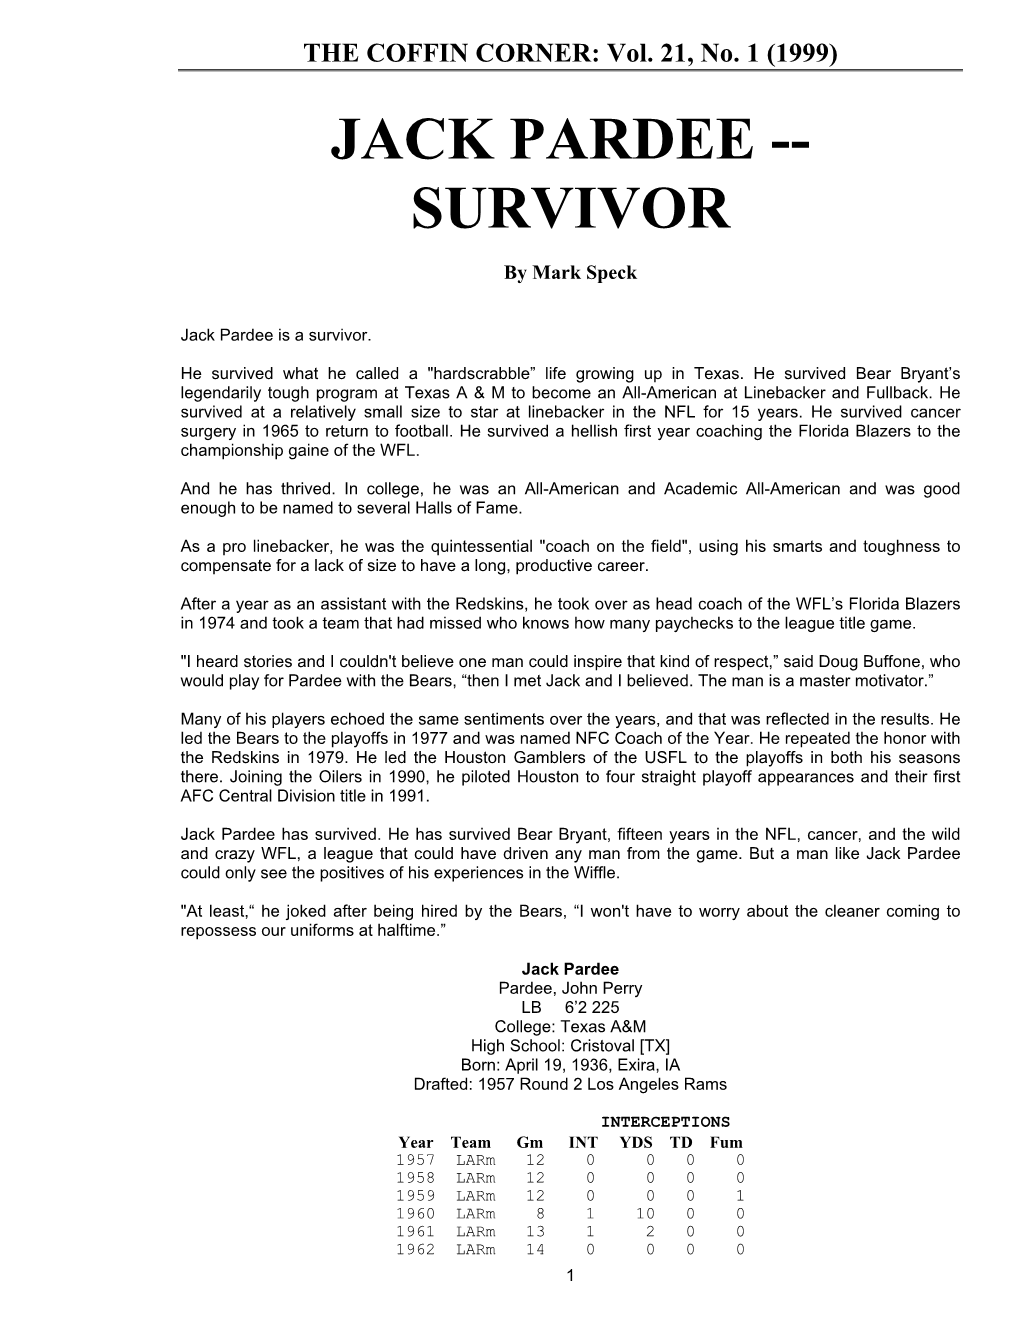 Jack Pardee -- Survivor